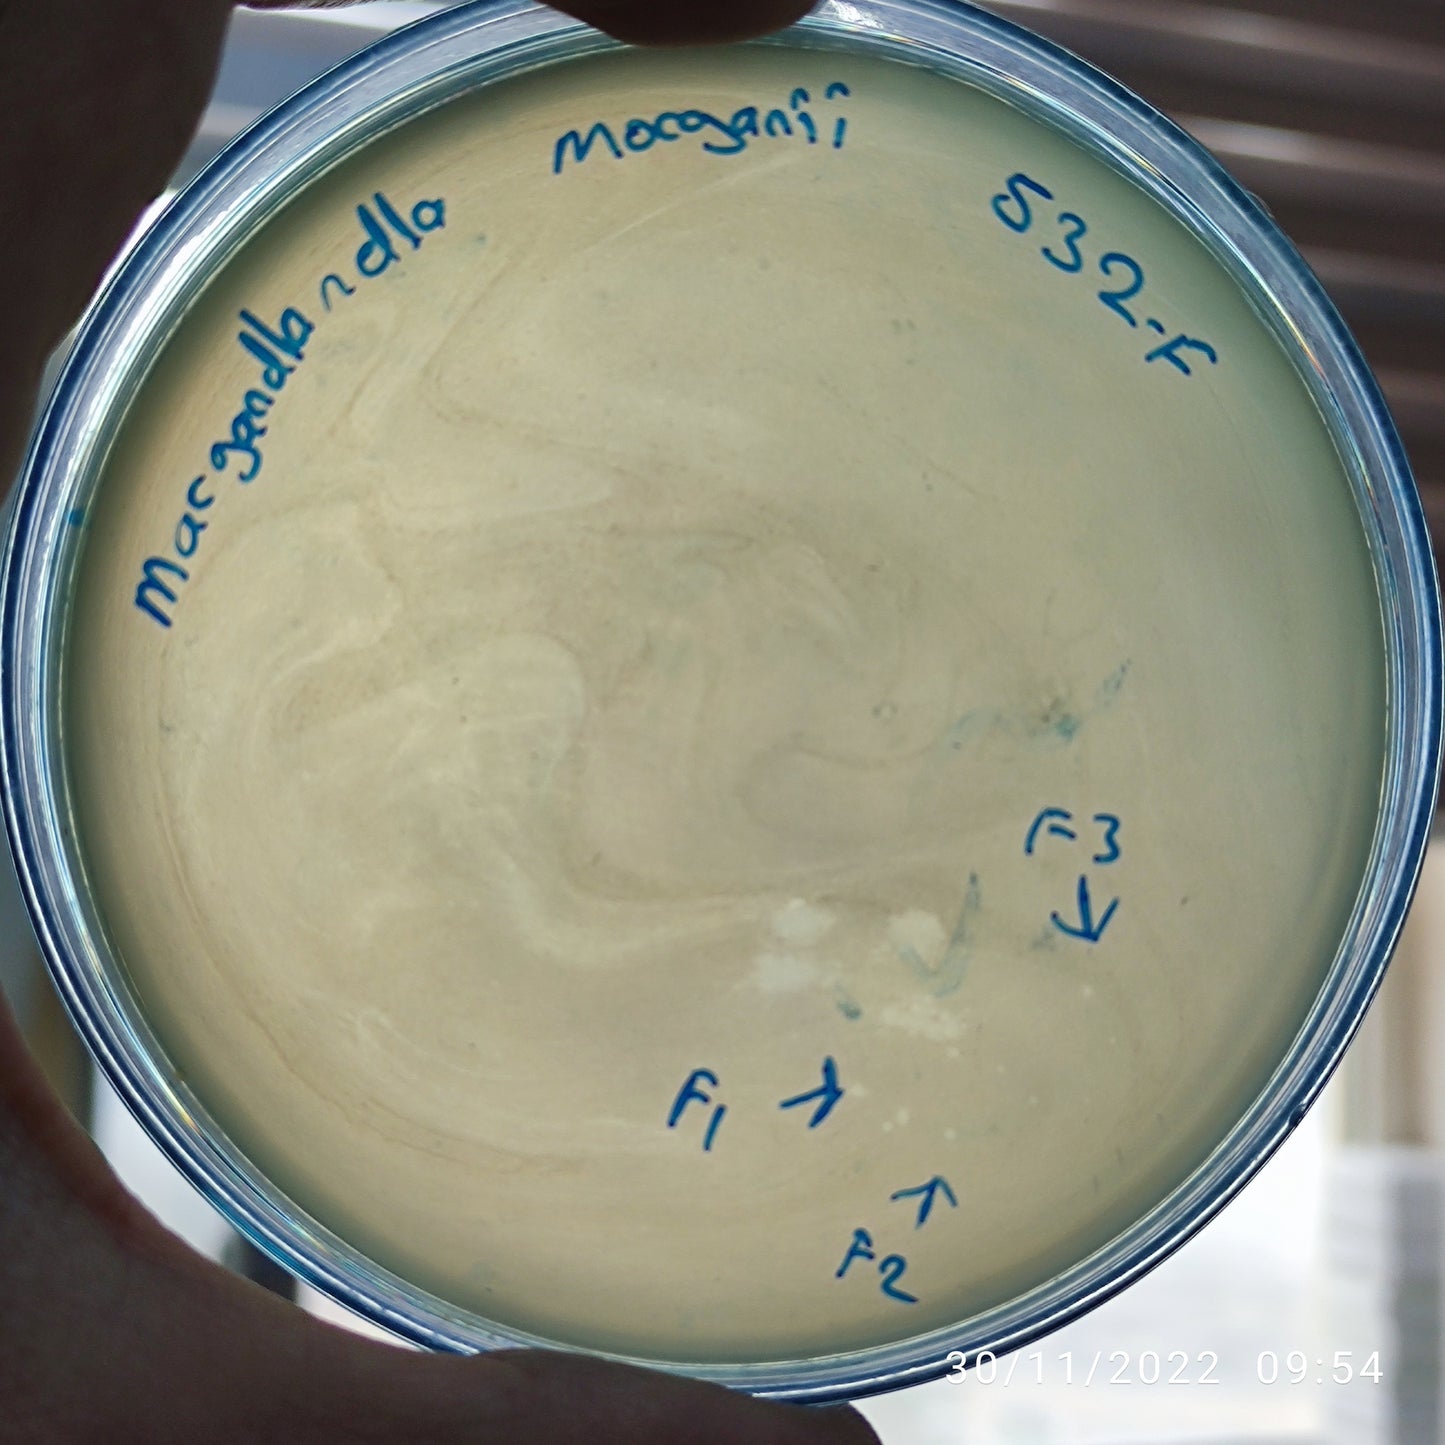 Morganella morganii bacteriophage 200532F